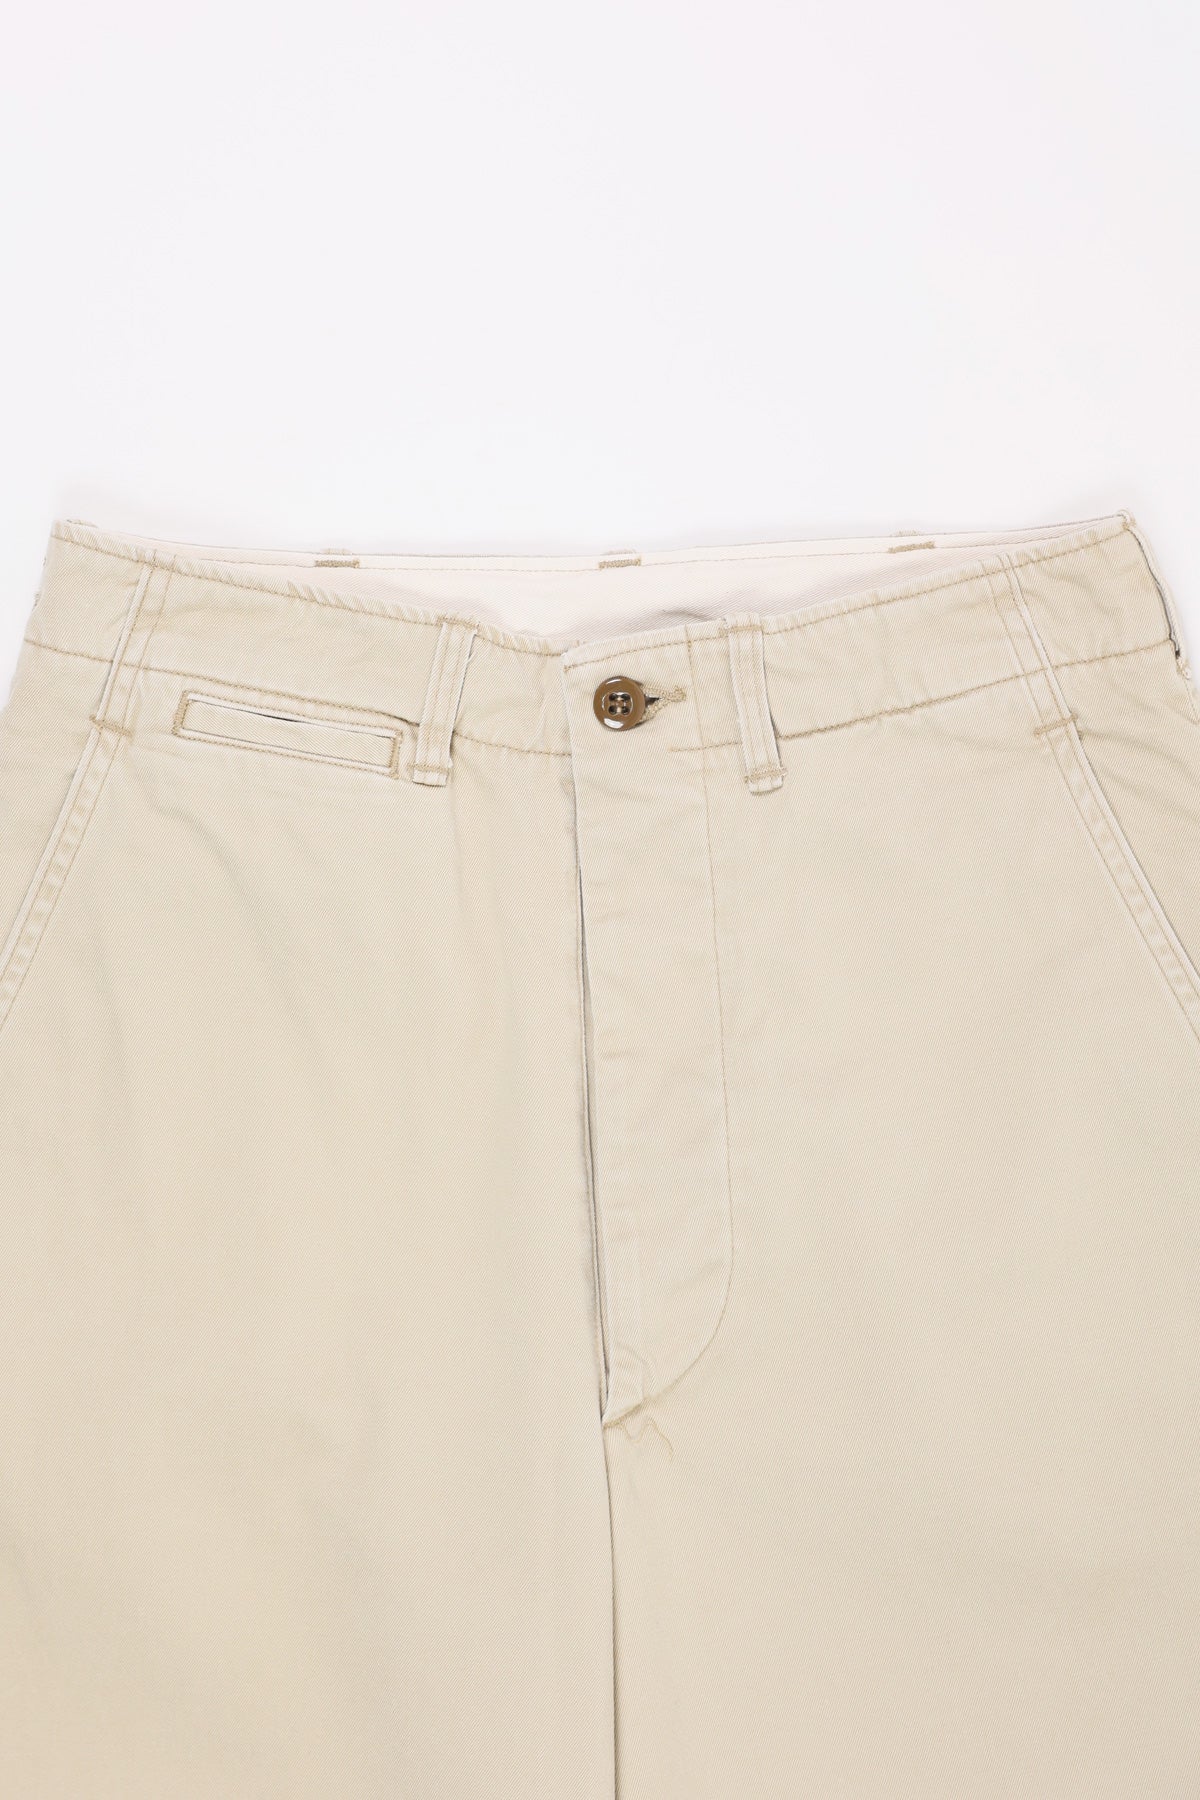 OrSlow Vintage Fit Army Trousers | Khaki Stone | Canoe Club